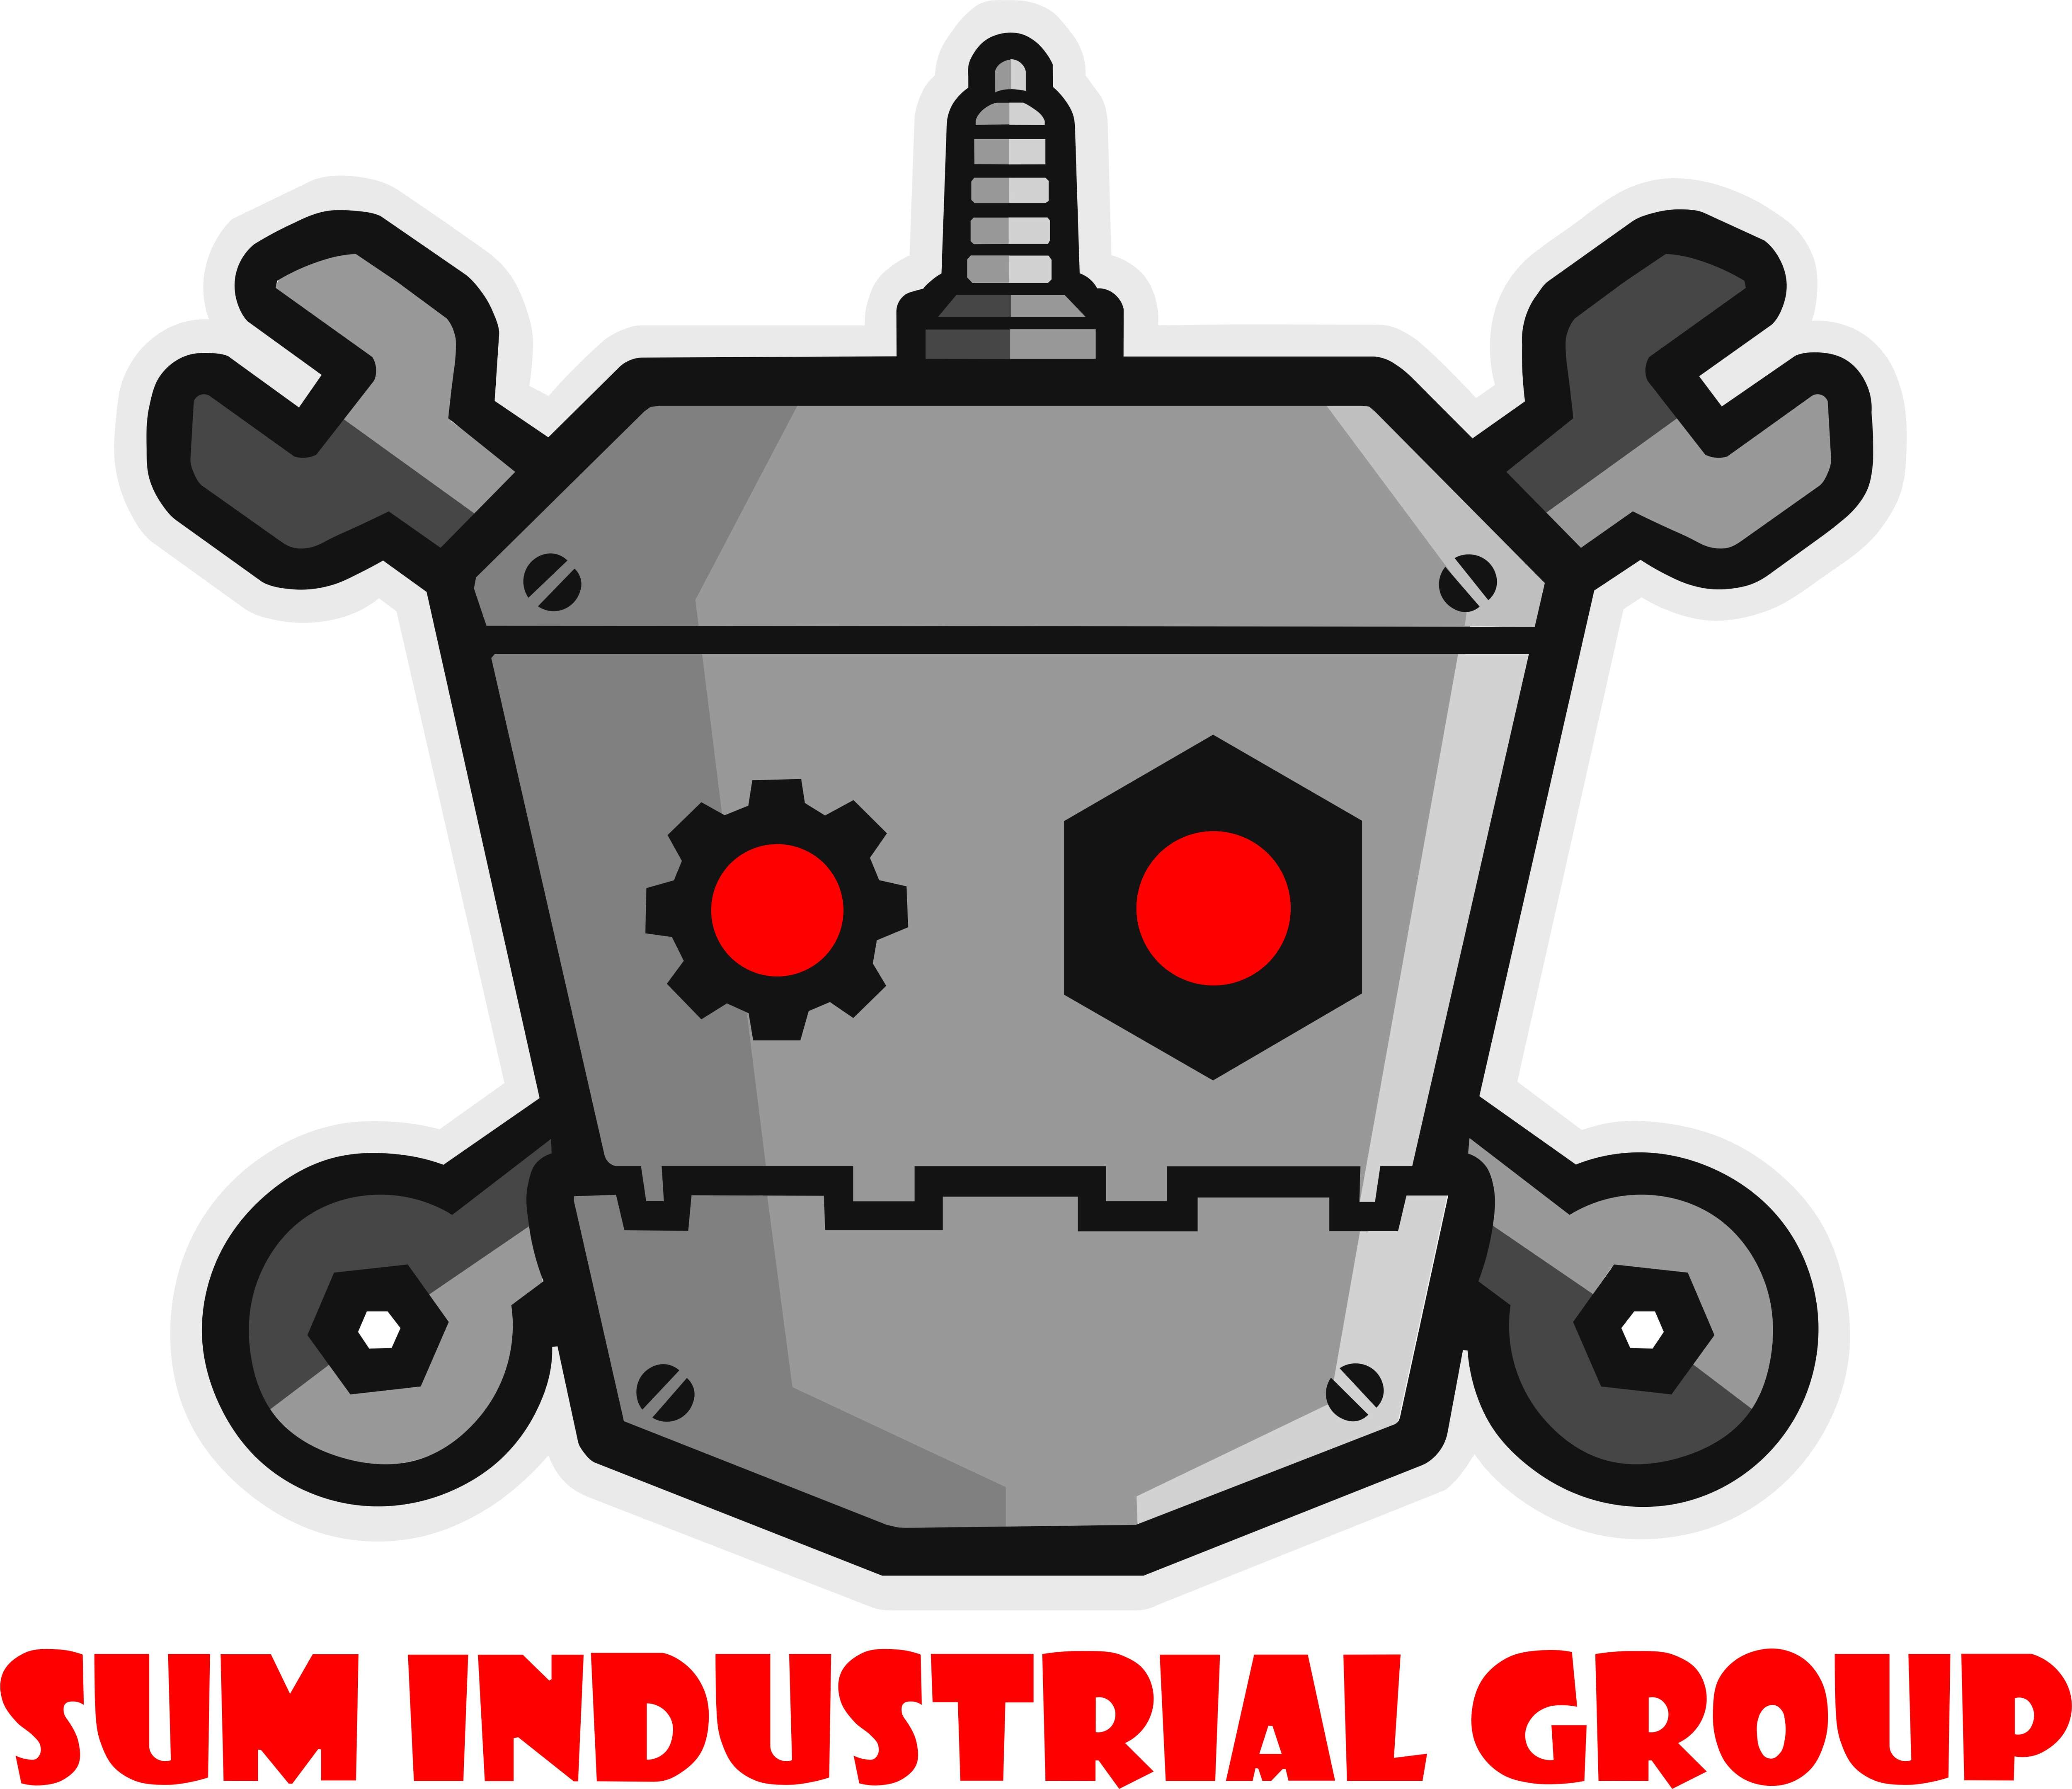 Sum Industrial Group